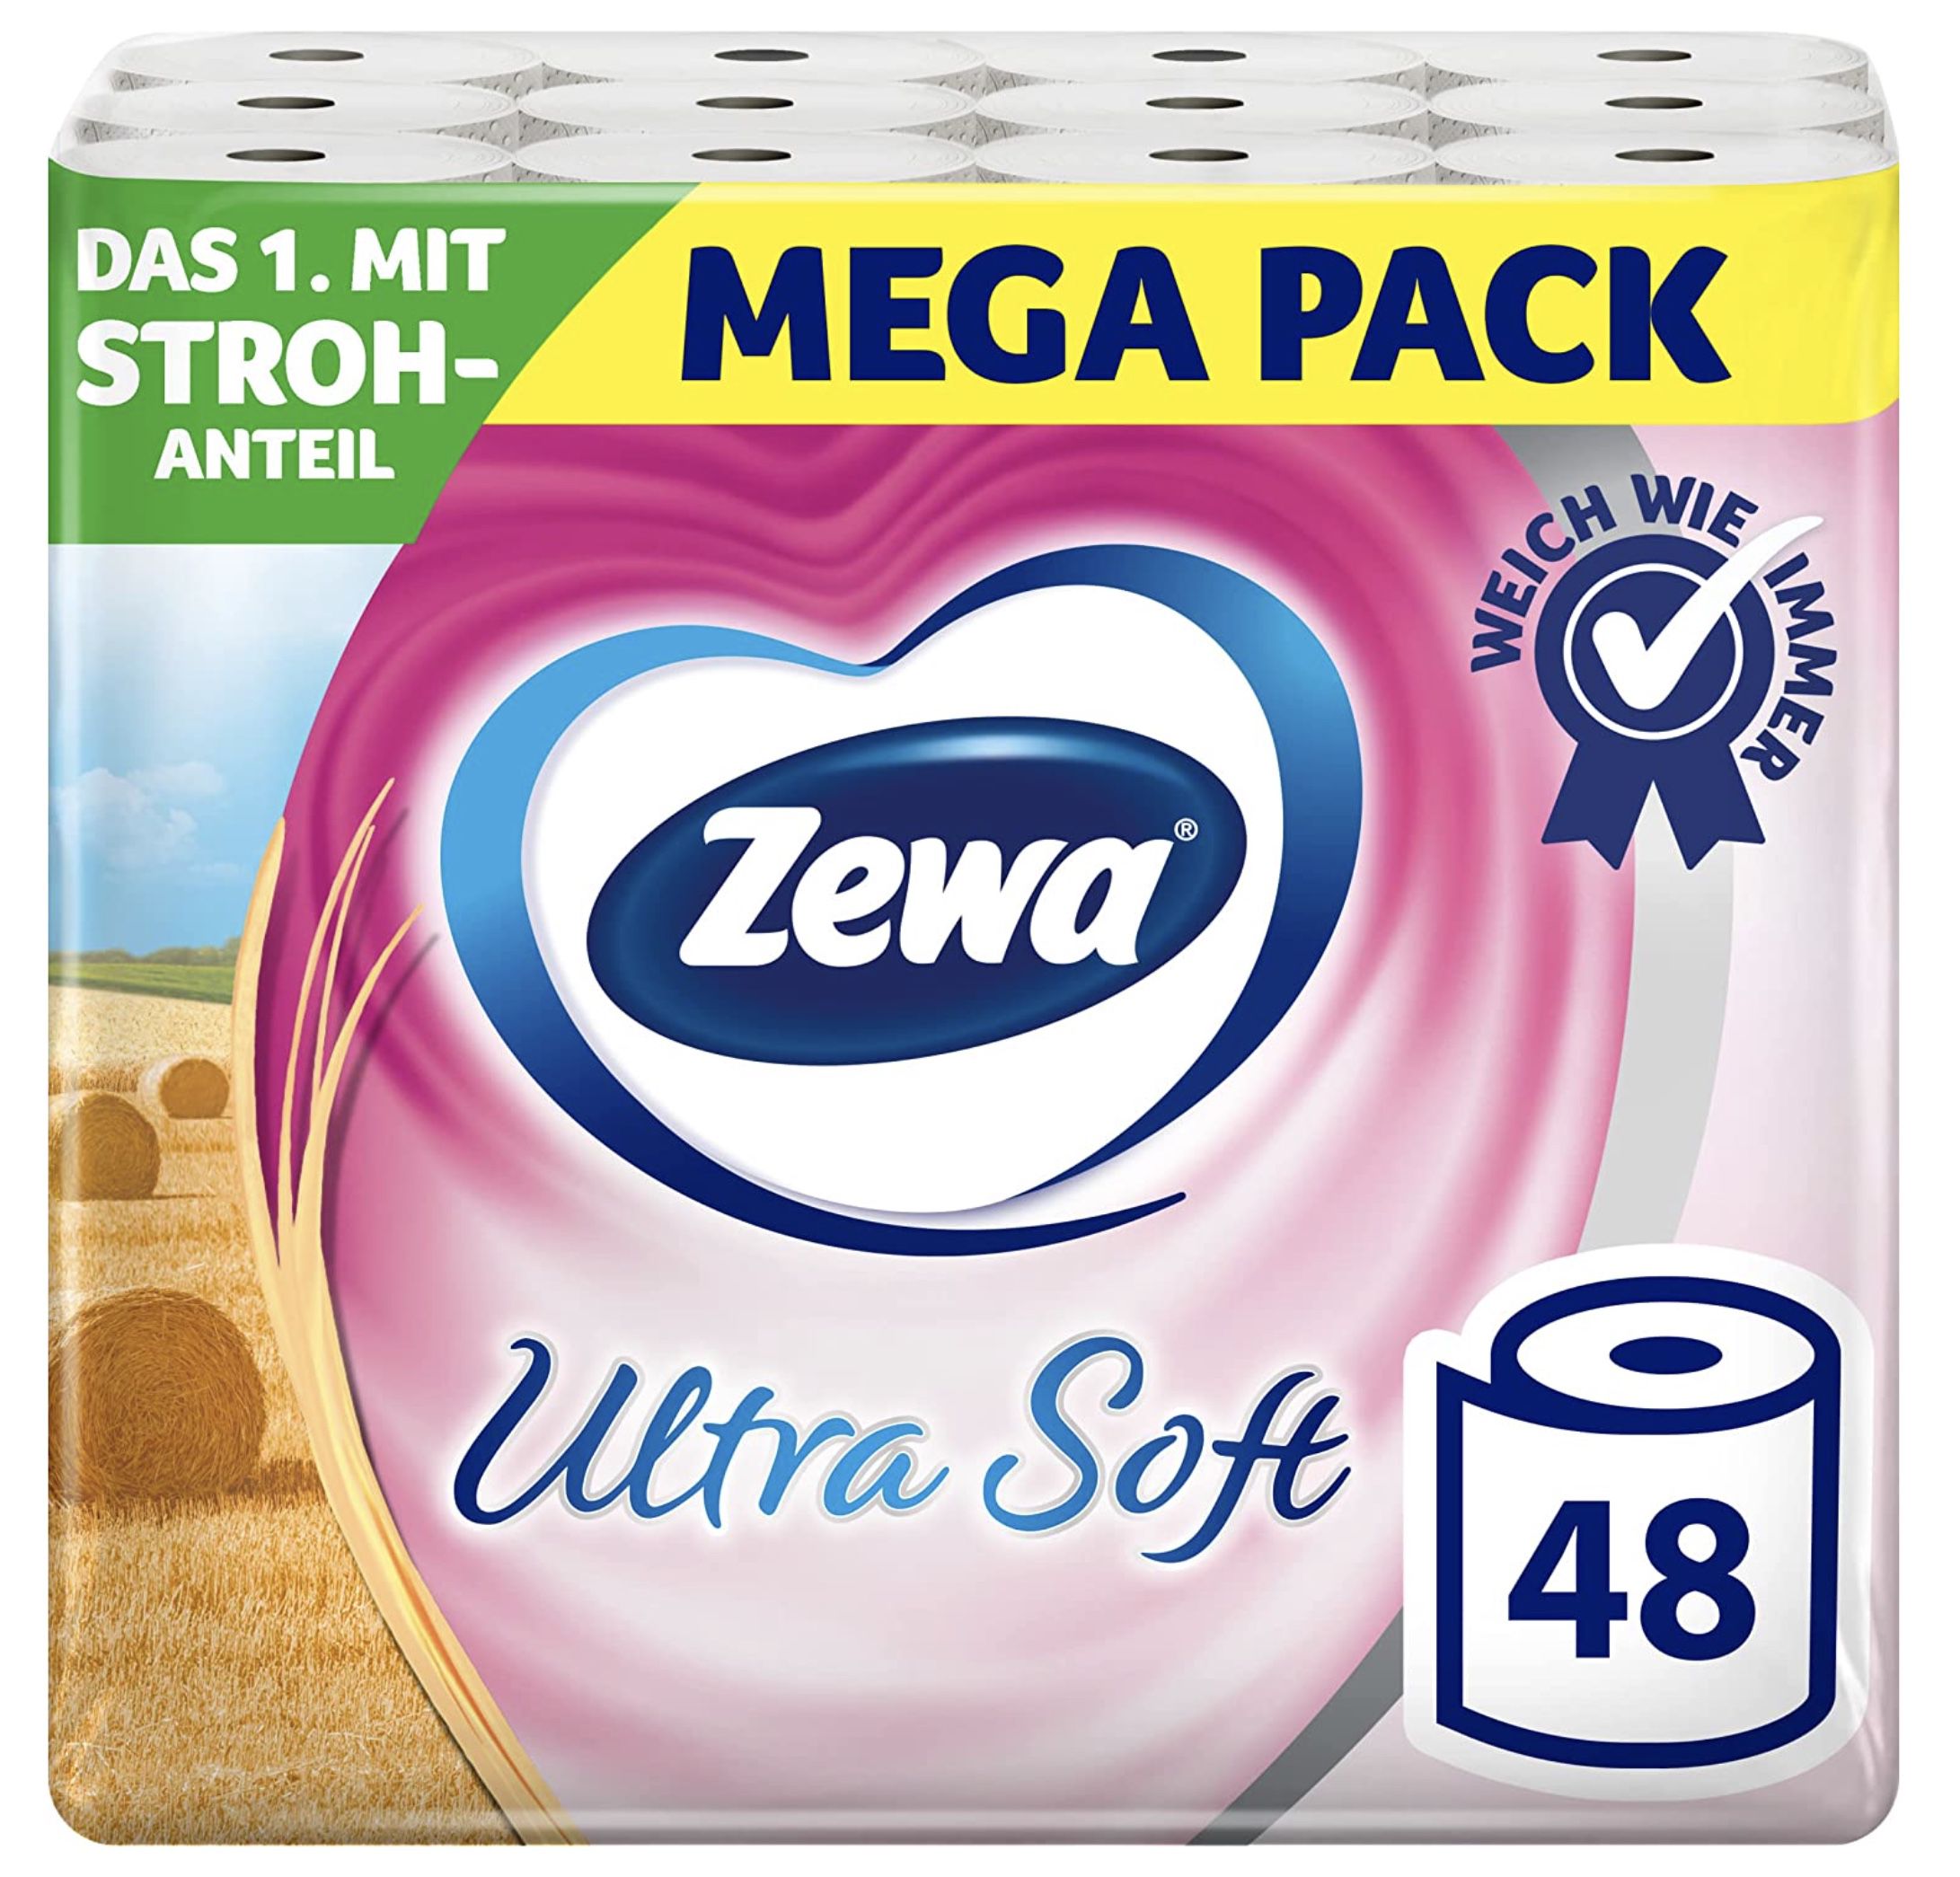 3x 16er Pack Zewa Ultra Soft Toilettenpapier mit Strohanteil ab 20,42€ (statt 27€)